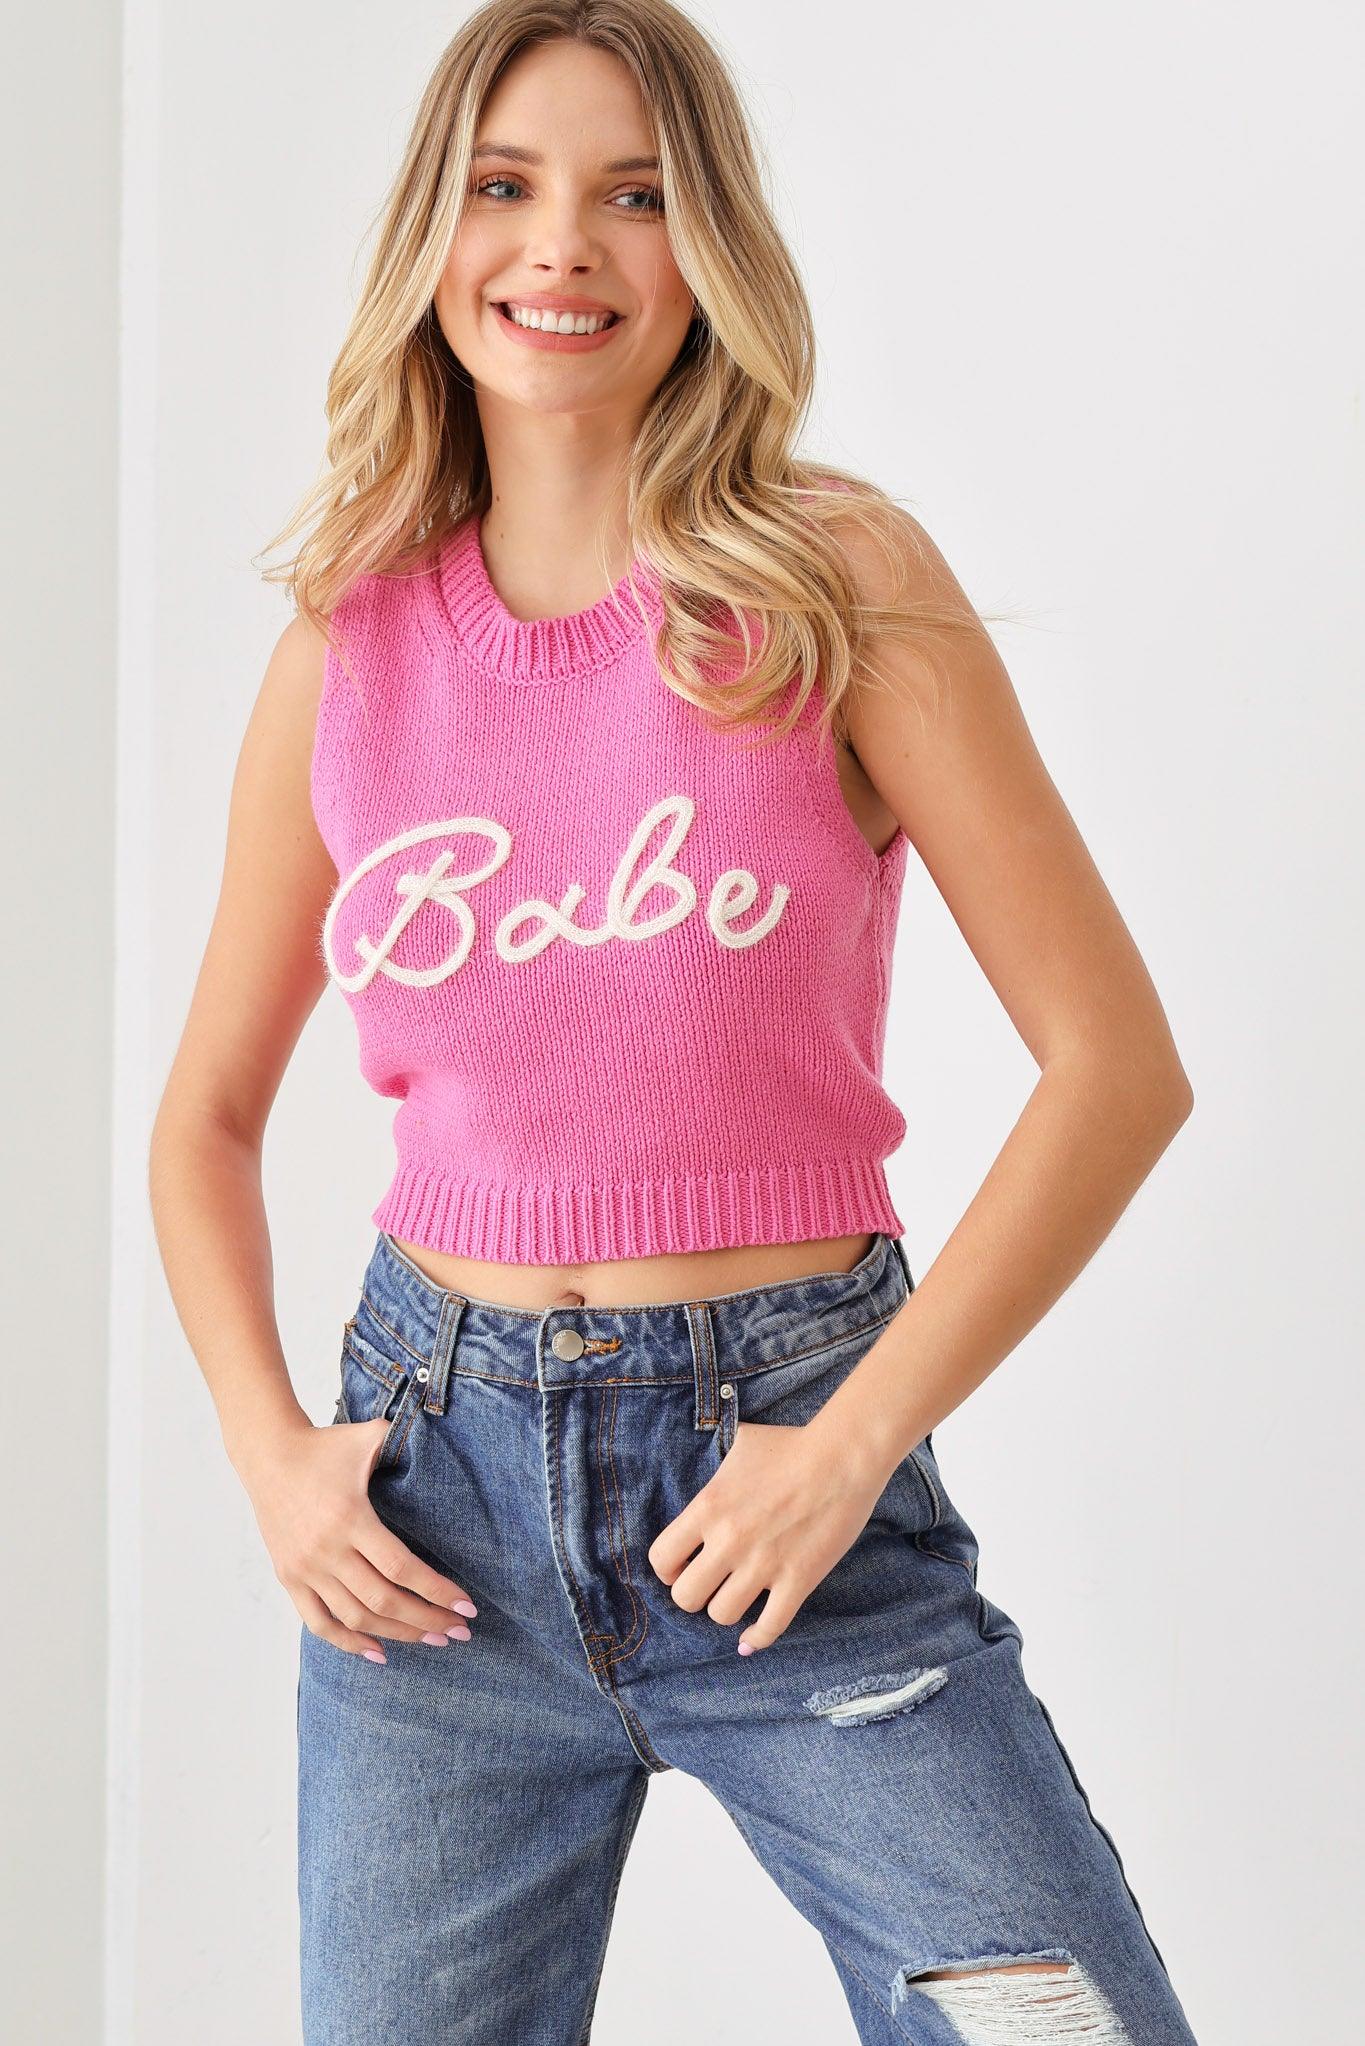 "Babe" Cropped Printed Sweater Knit Tank Vest - Tasha Apparel